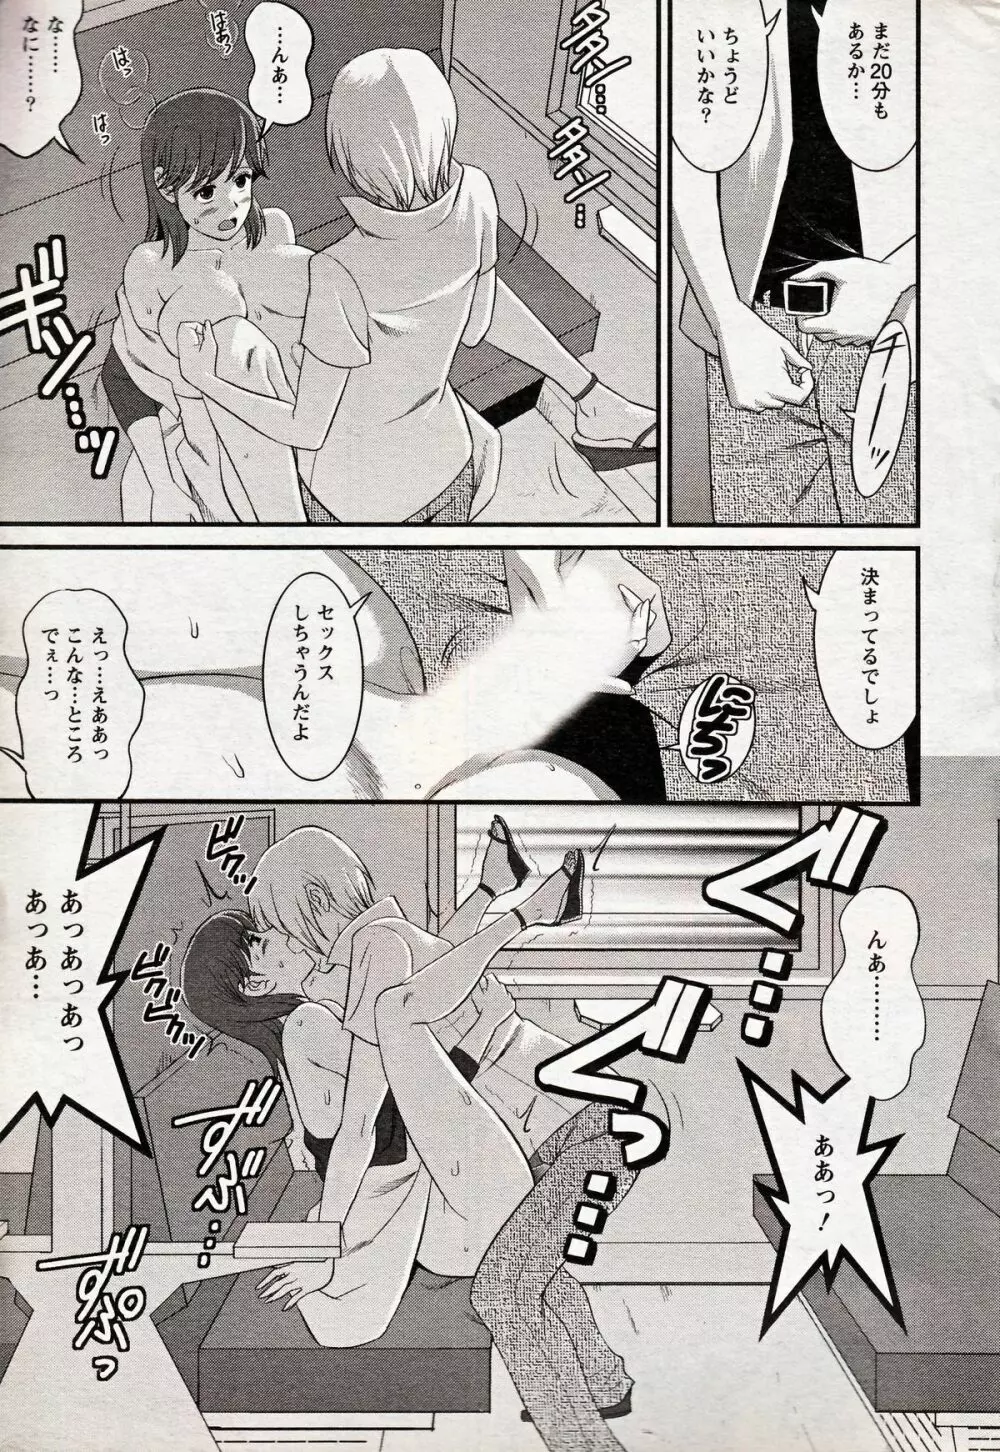 Haken no Muuko-san 18 17ページ